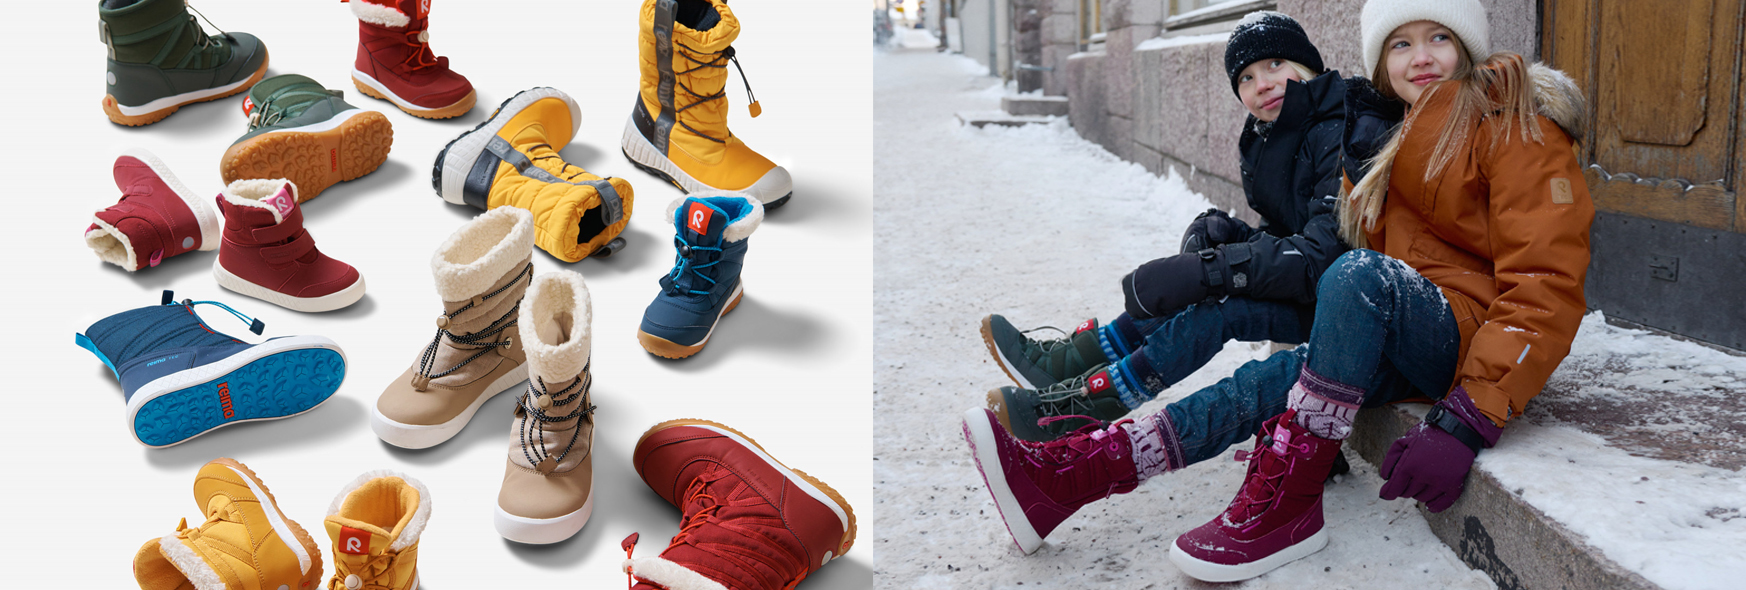 Сапоги и ботинки на зиму для детей